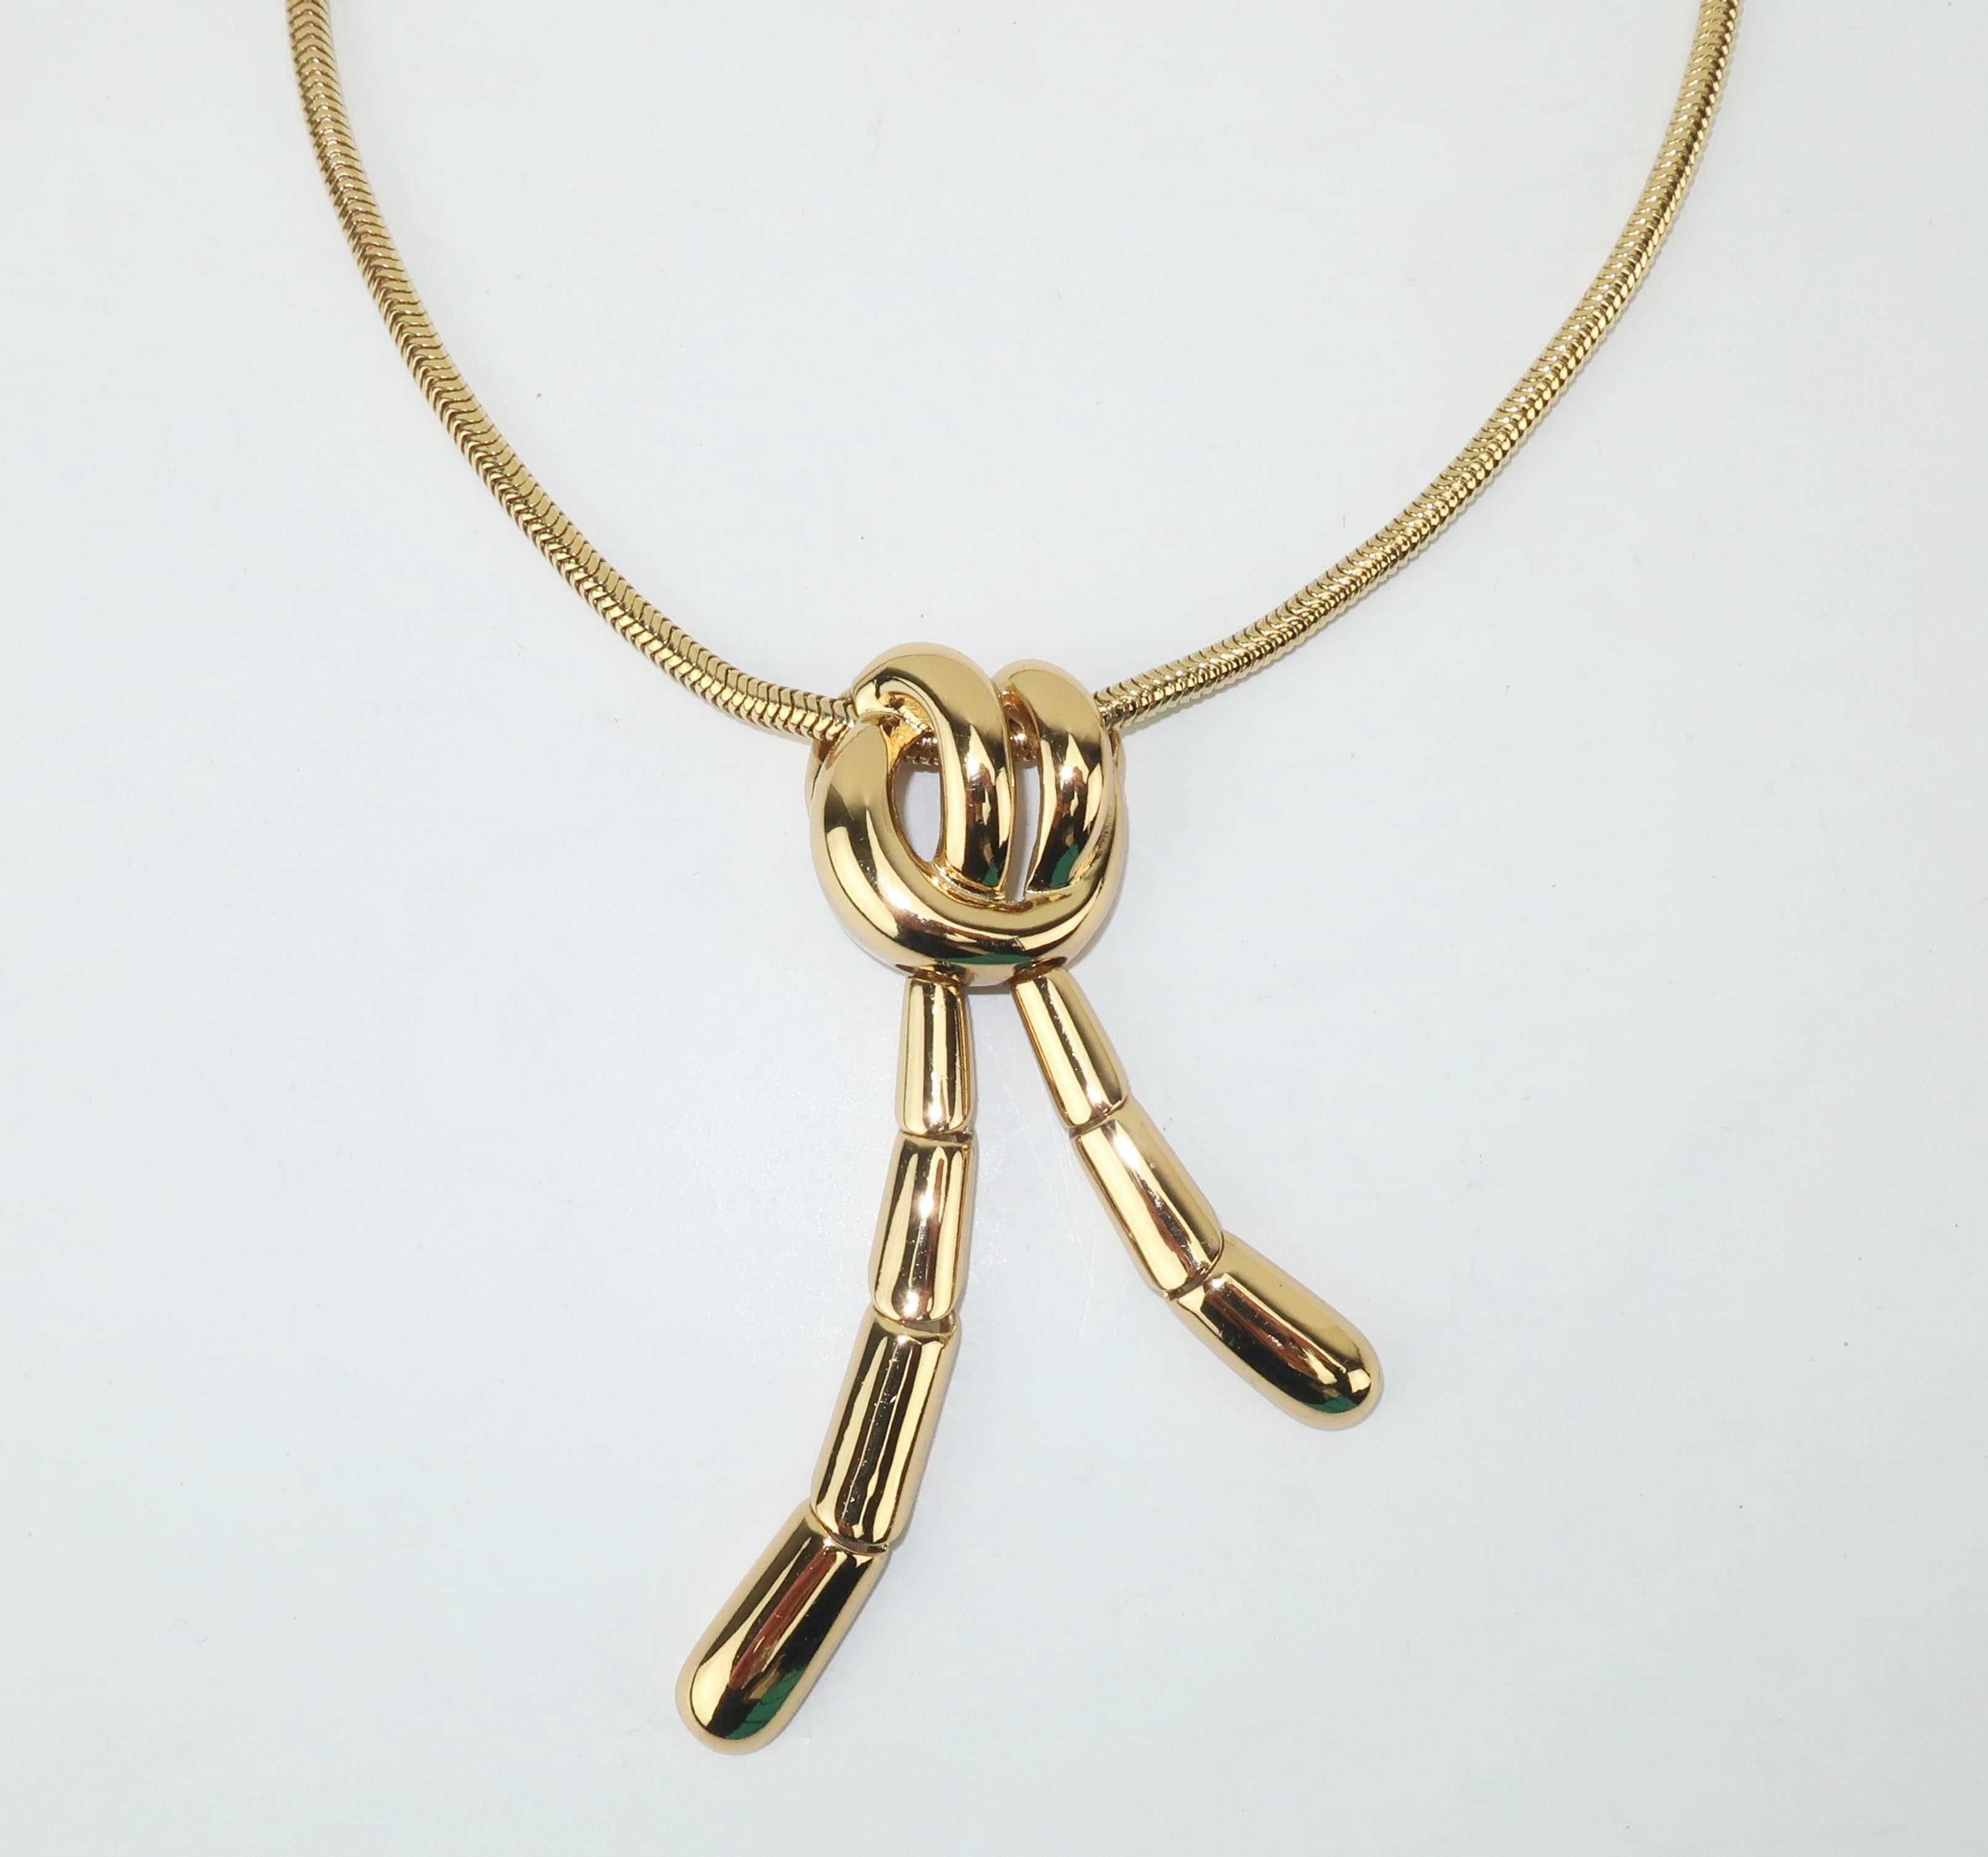 Modernist Vintage Monet Gold Tone Articulated Knot Necklace